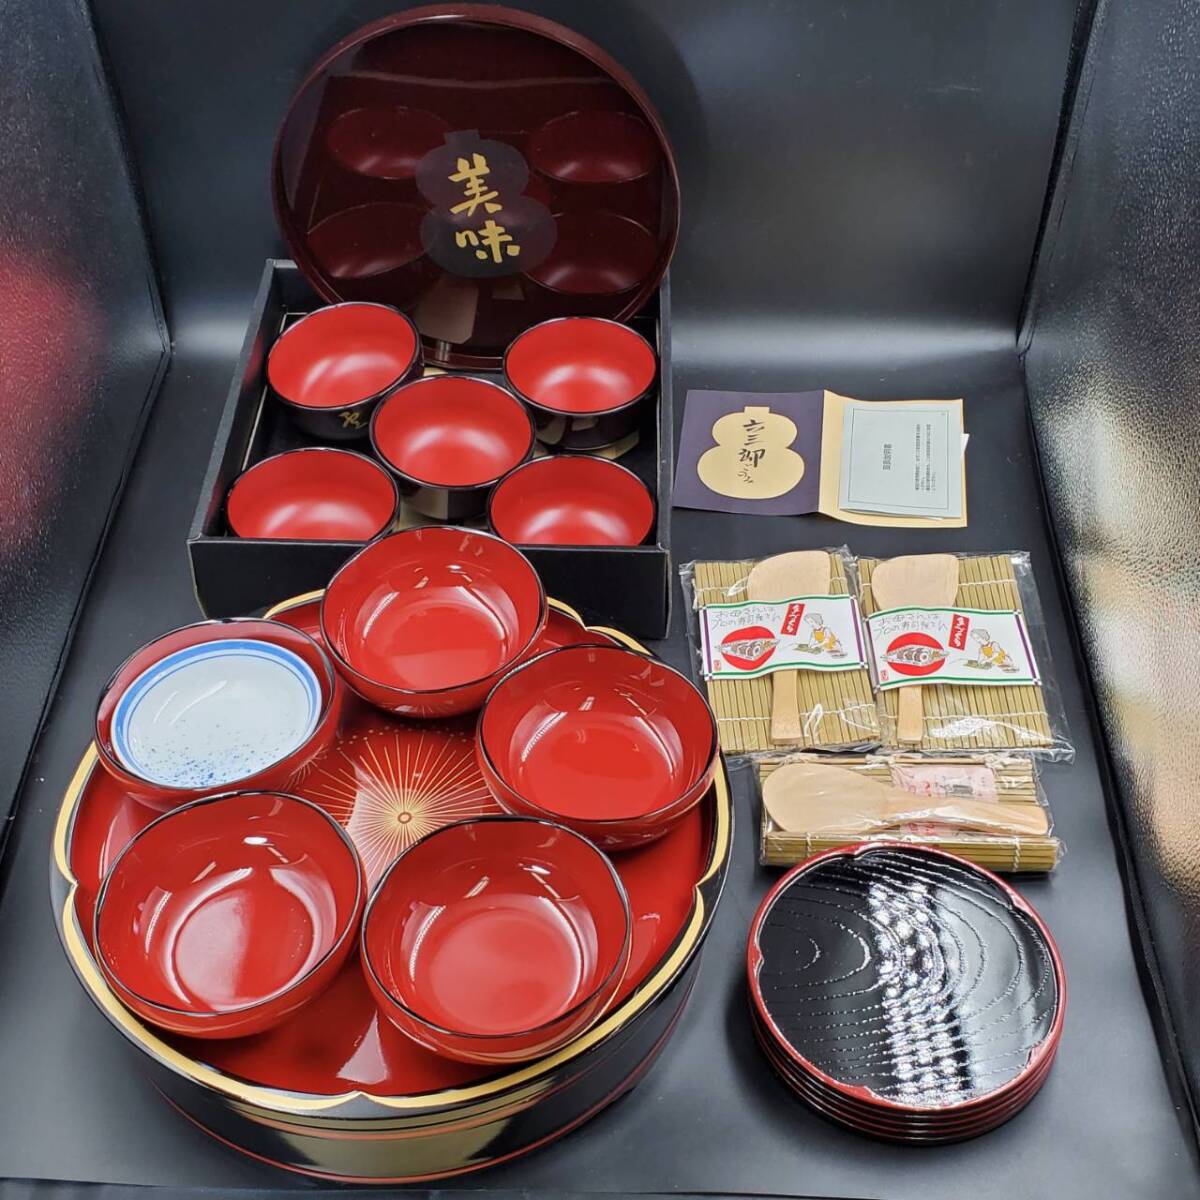 #21693B 漆器 食器セットまとめ 六三郎ごのみ 茶溜丸盆付小鉢セット / ホームパーティーセット 梅づくし 食器 工芸品 料理 アンティーク_商品説明にも画像が掲載されています。